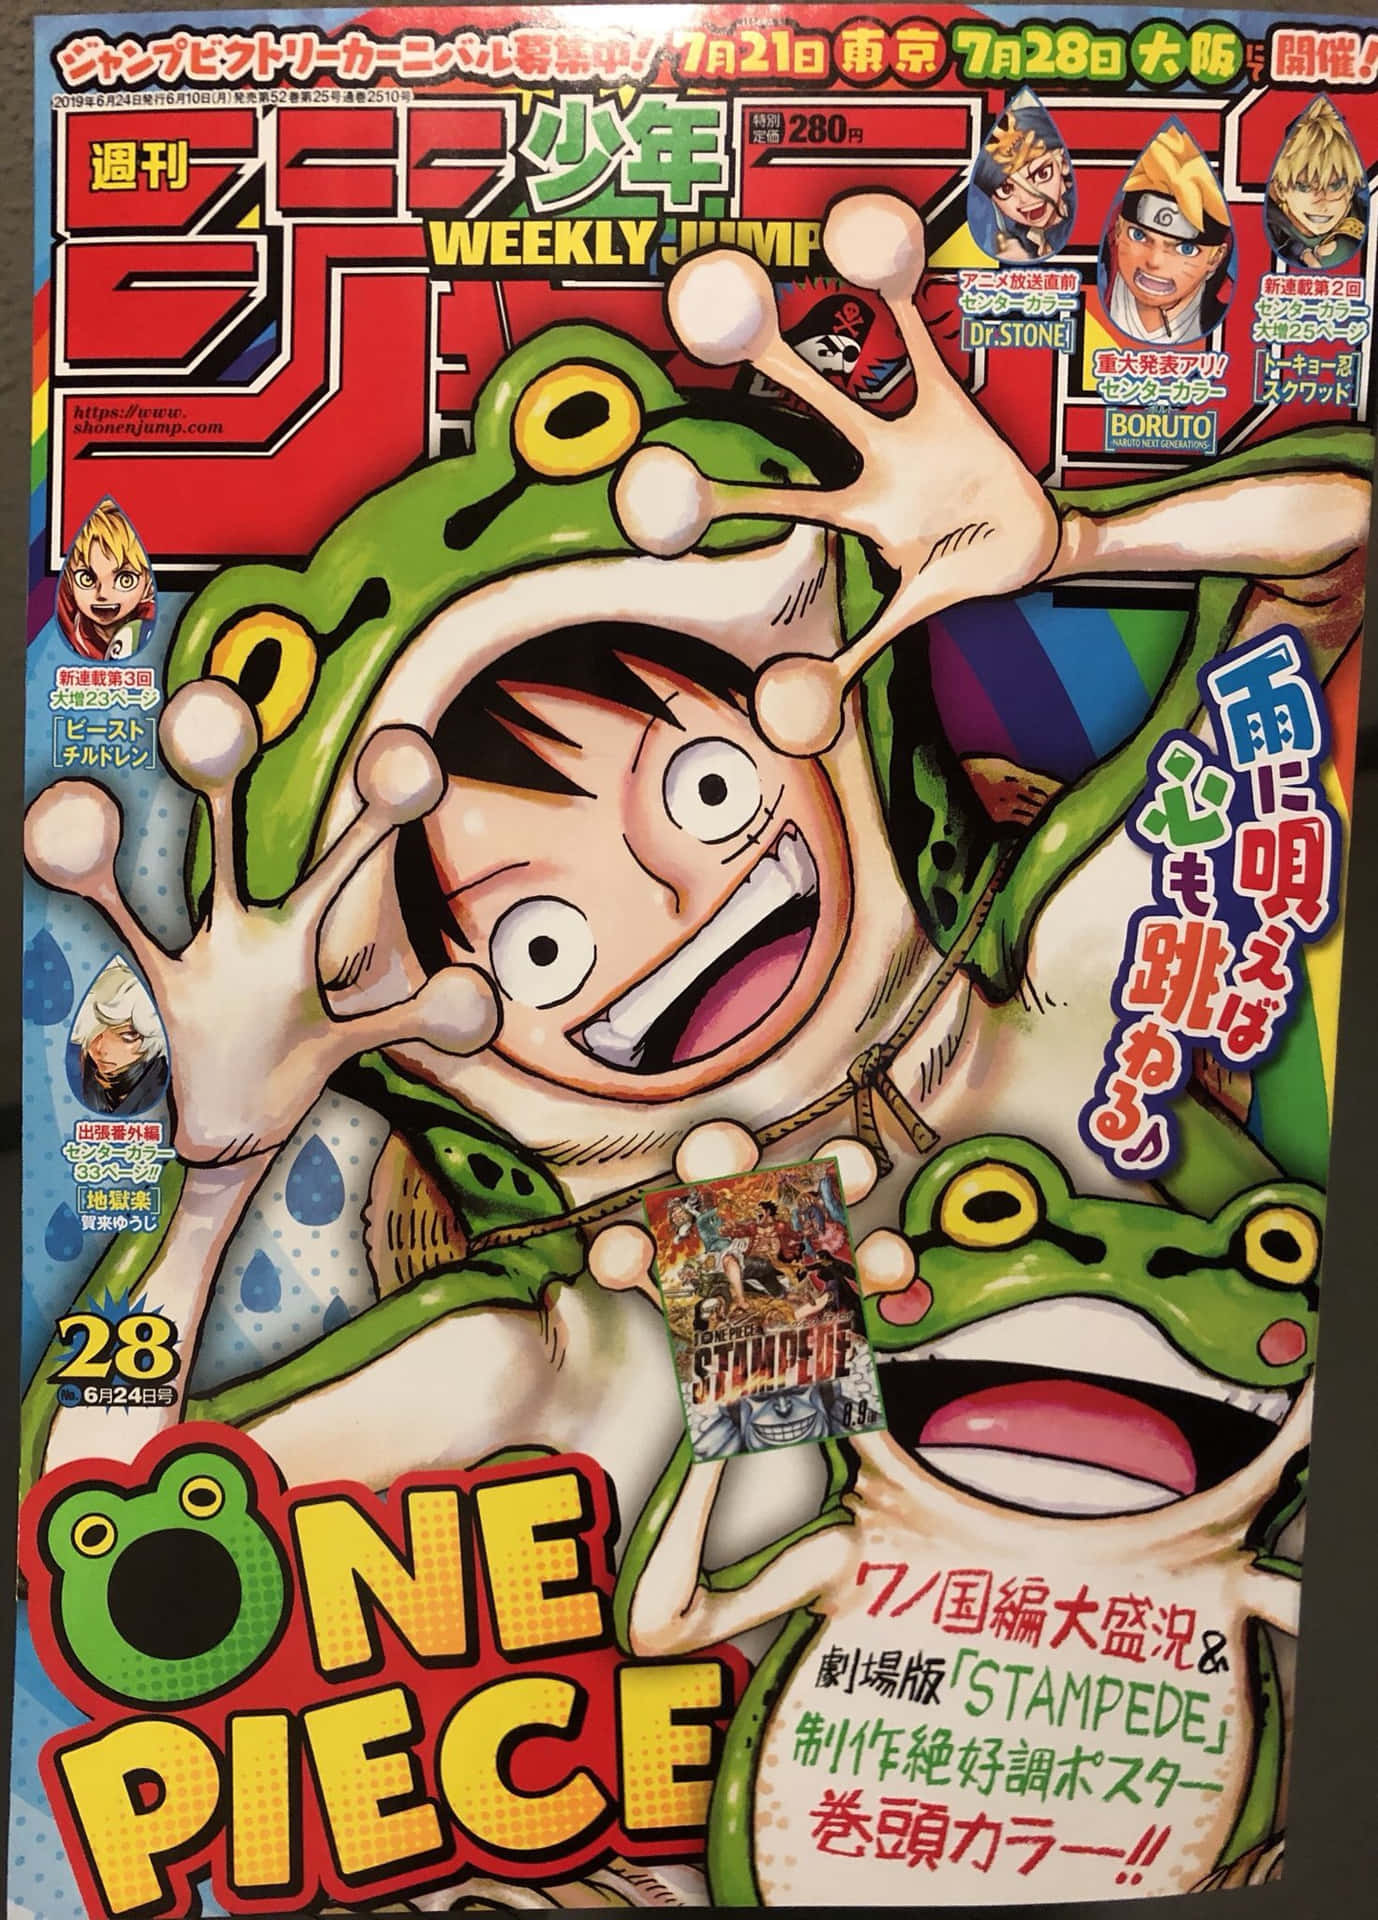 Read Popular Manga at Shonen Jump Wallpaper